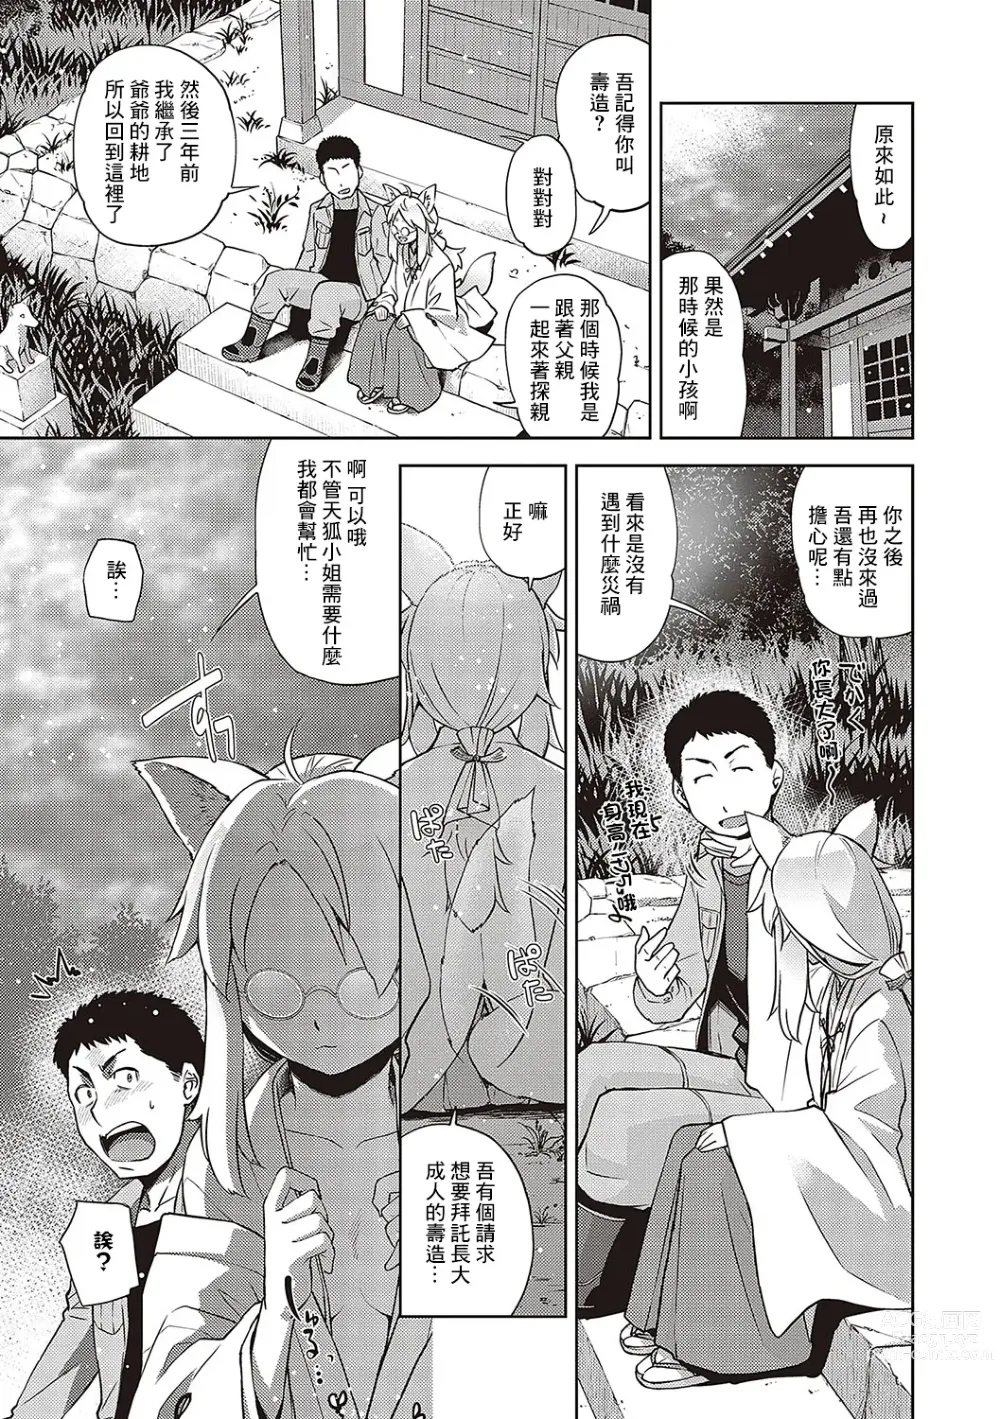 Page 7 of manga Mateba Megane no Kitsune Ari